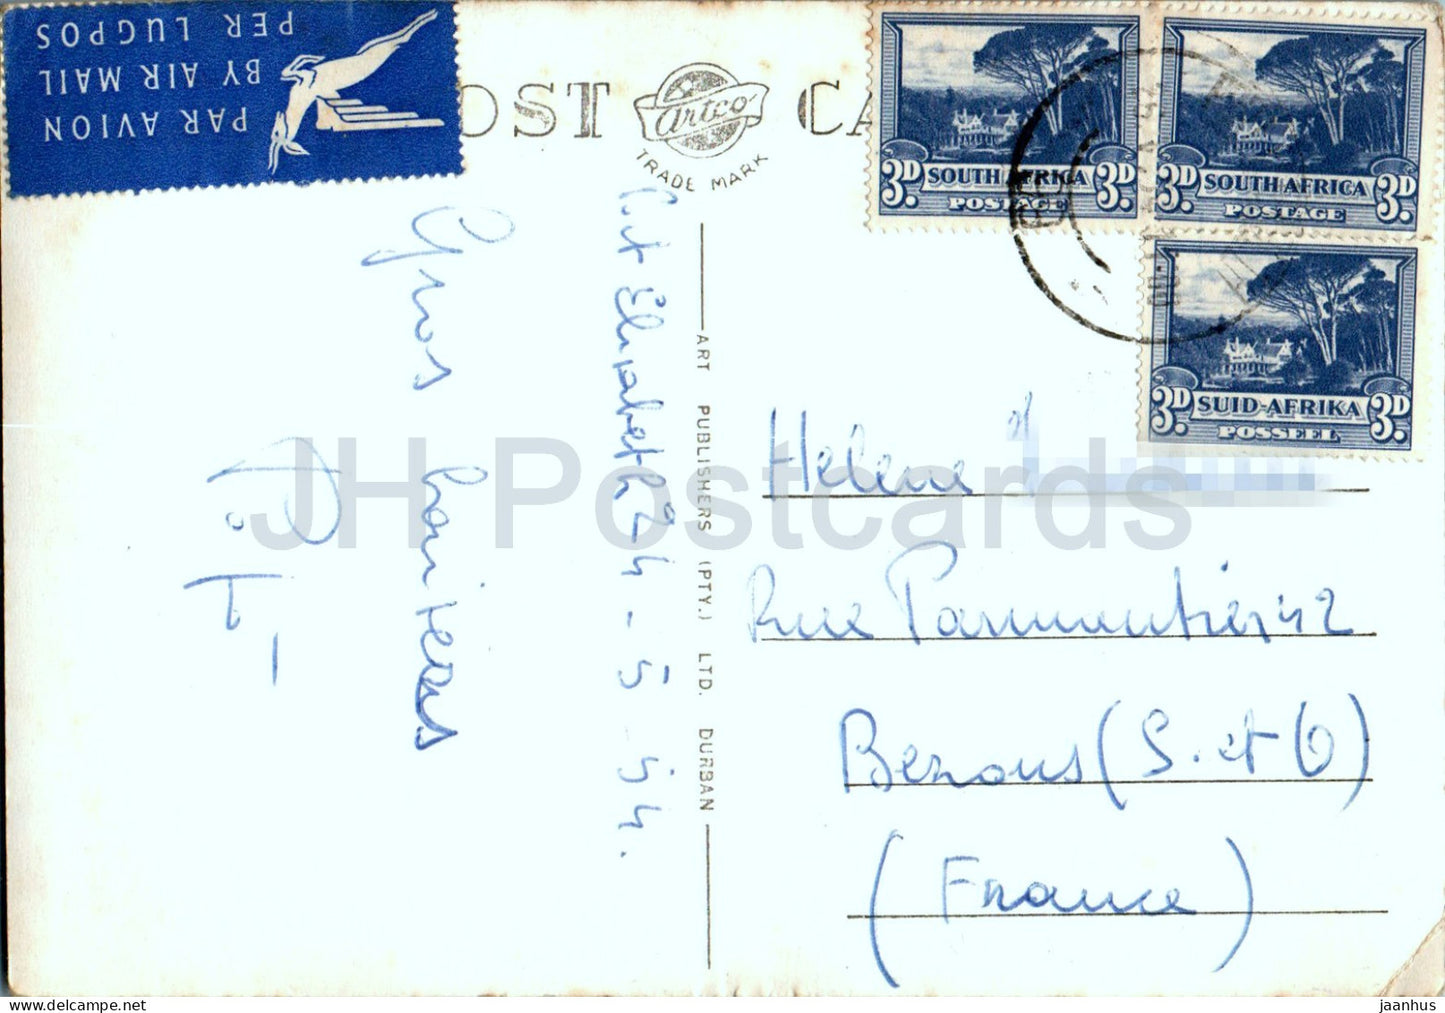 Zulu-Häuptling - Volkskostüme - 791 - alte Postkarte - 1954 - Südafrika - gebraucht 